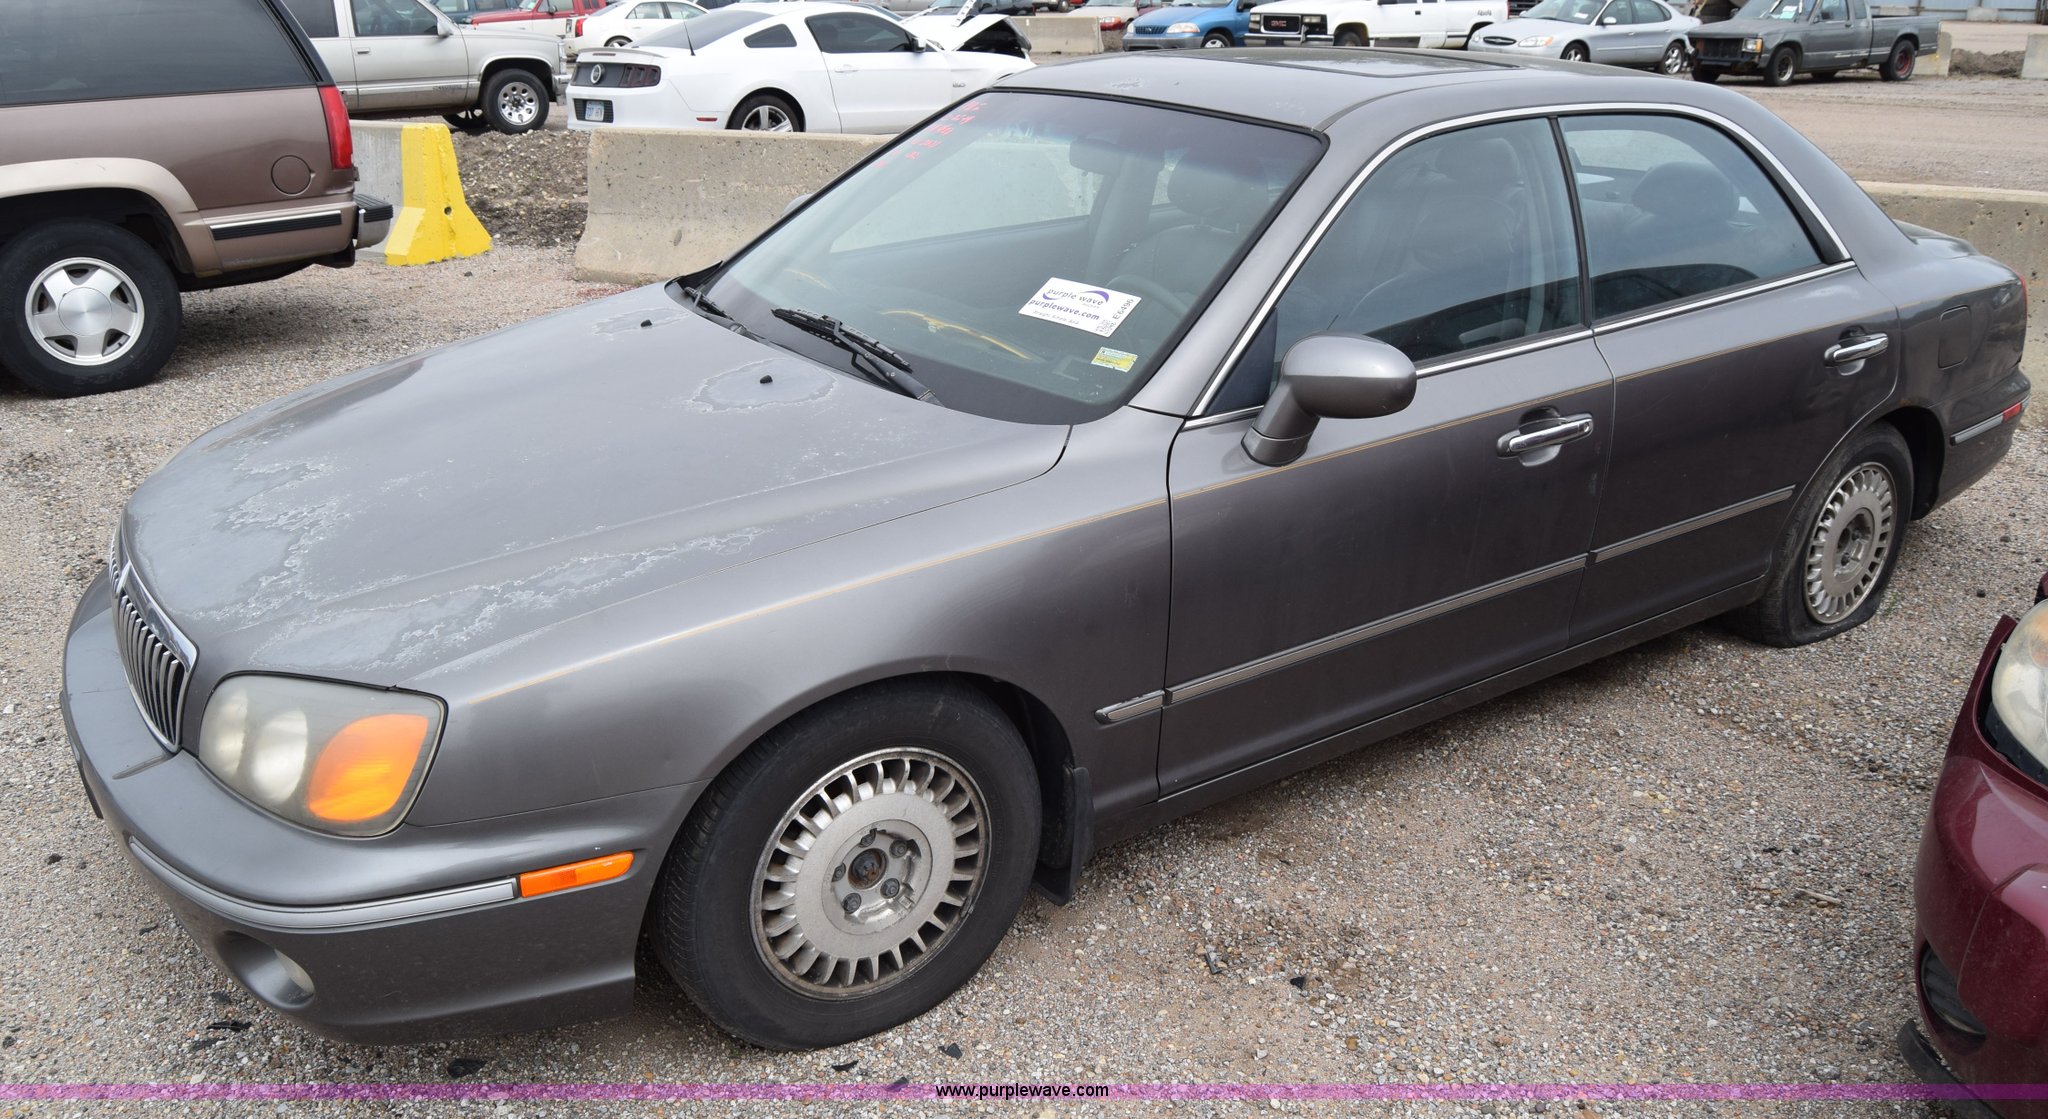 2001 Hyundai XG300 in Wichita, KS | Item E6496 sold | Purple Wave